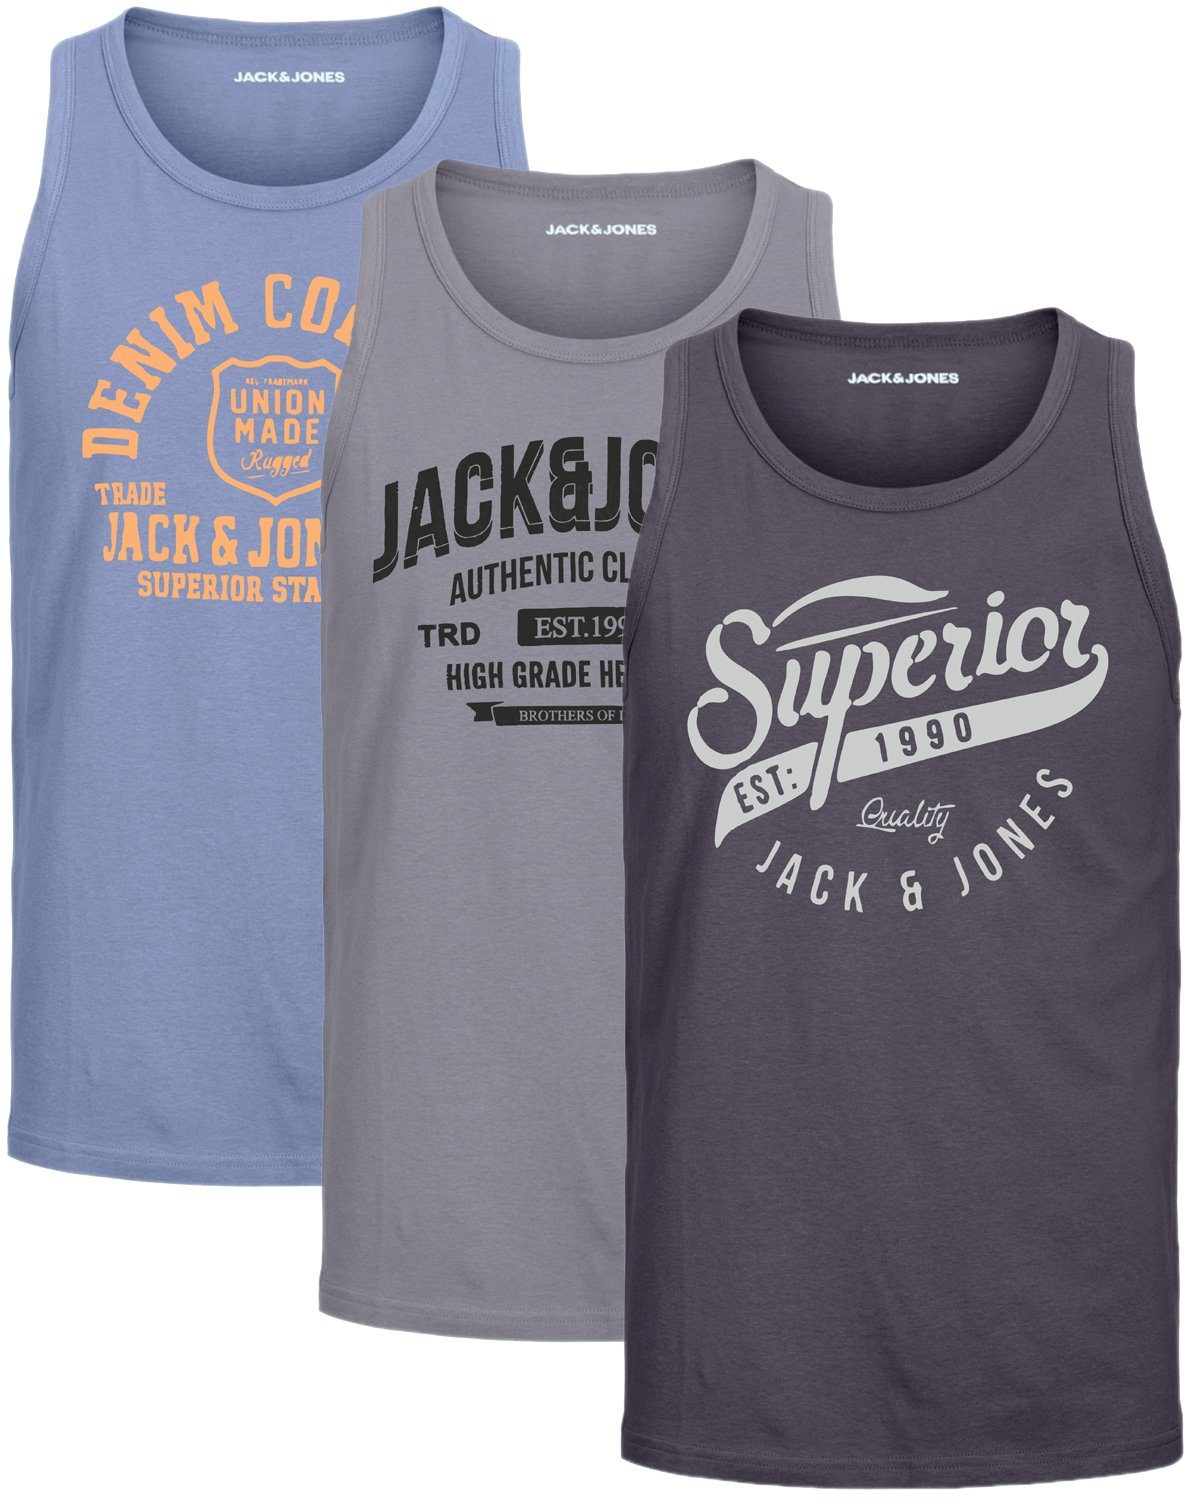 Jack & Jones Tanktop Bequemes Slimfit Shirt mit Printdruck (3er-Pack) unifarbenes Oberteil aus Baumwolle, Größe L